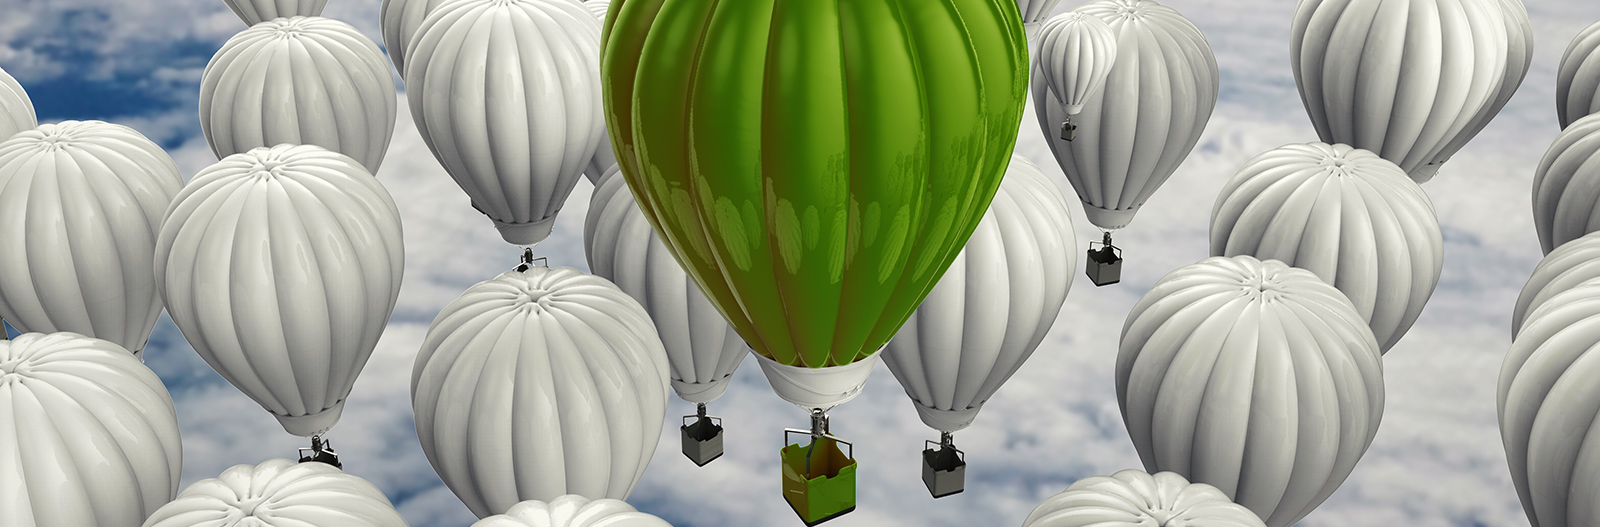 Frontpageslider – Heißluftballons